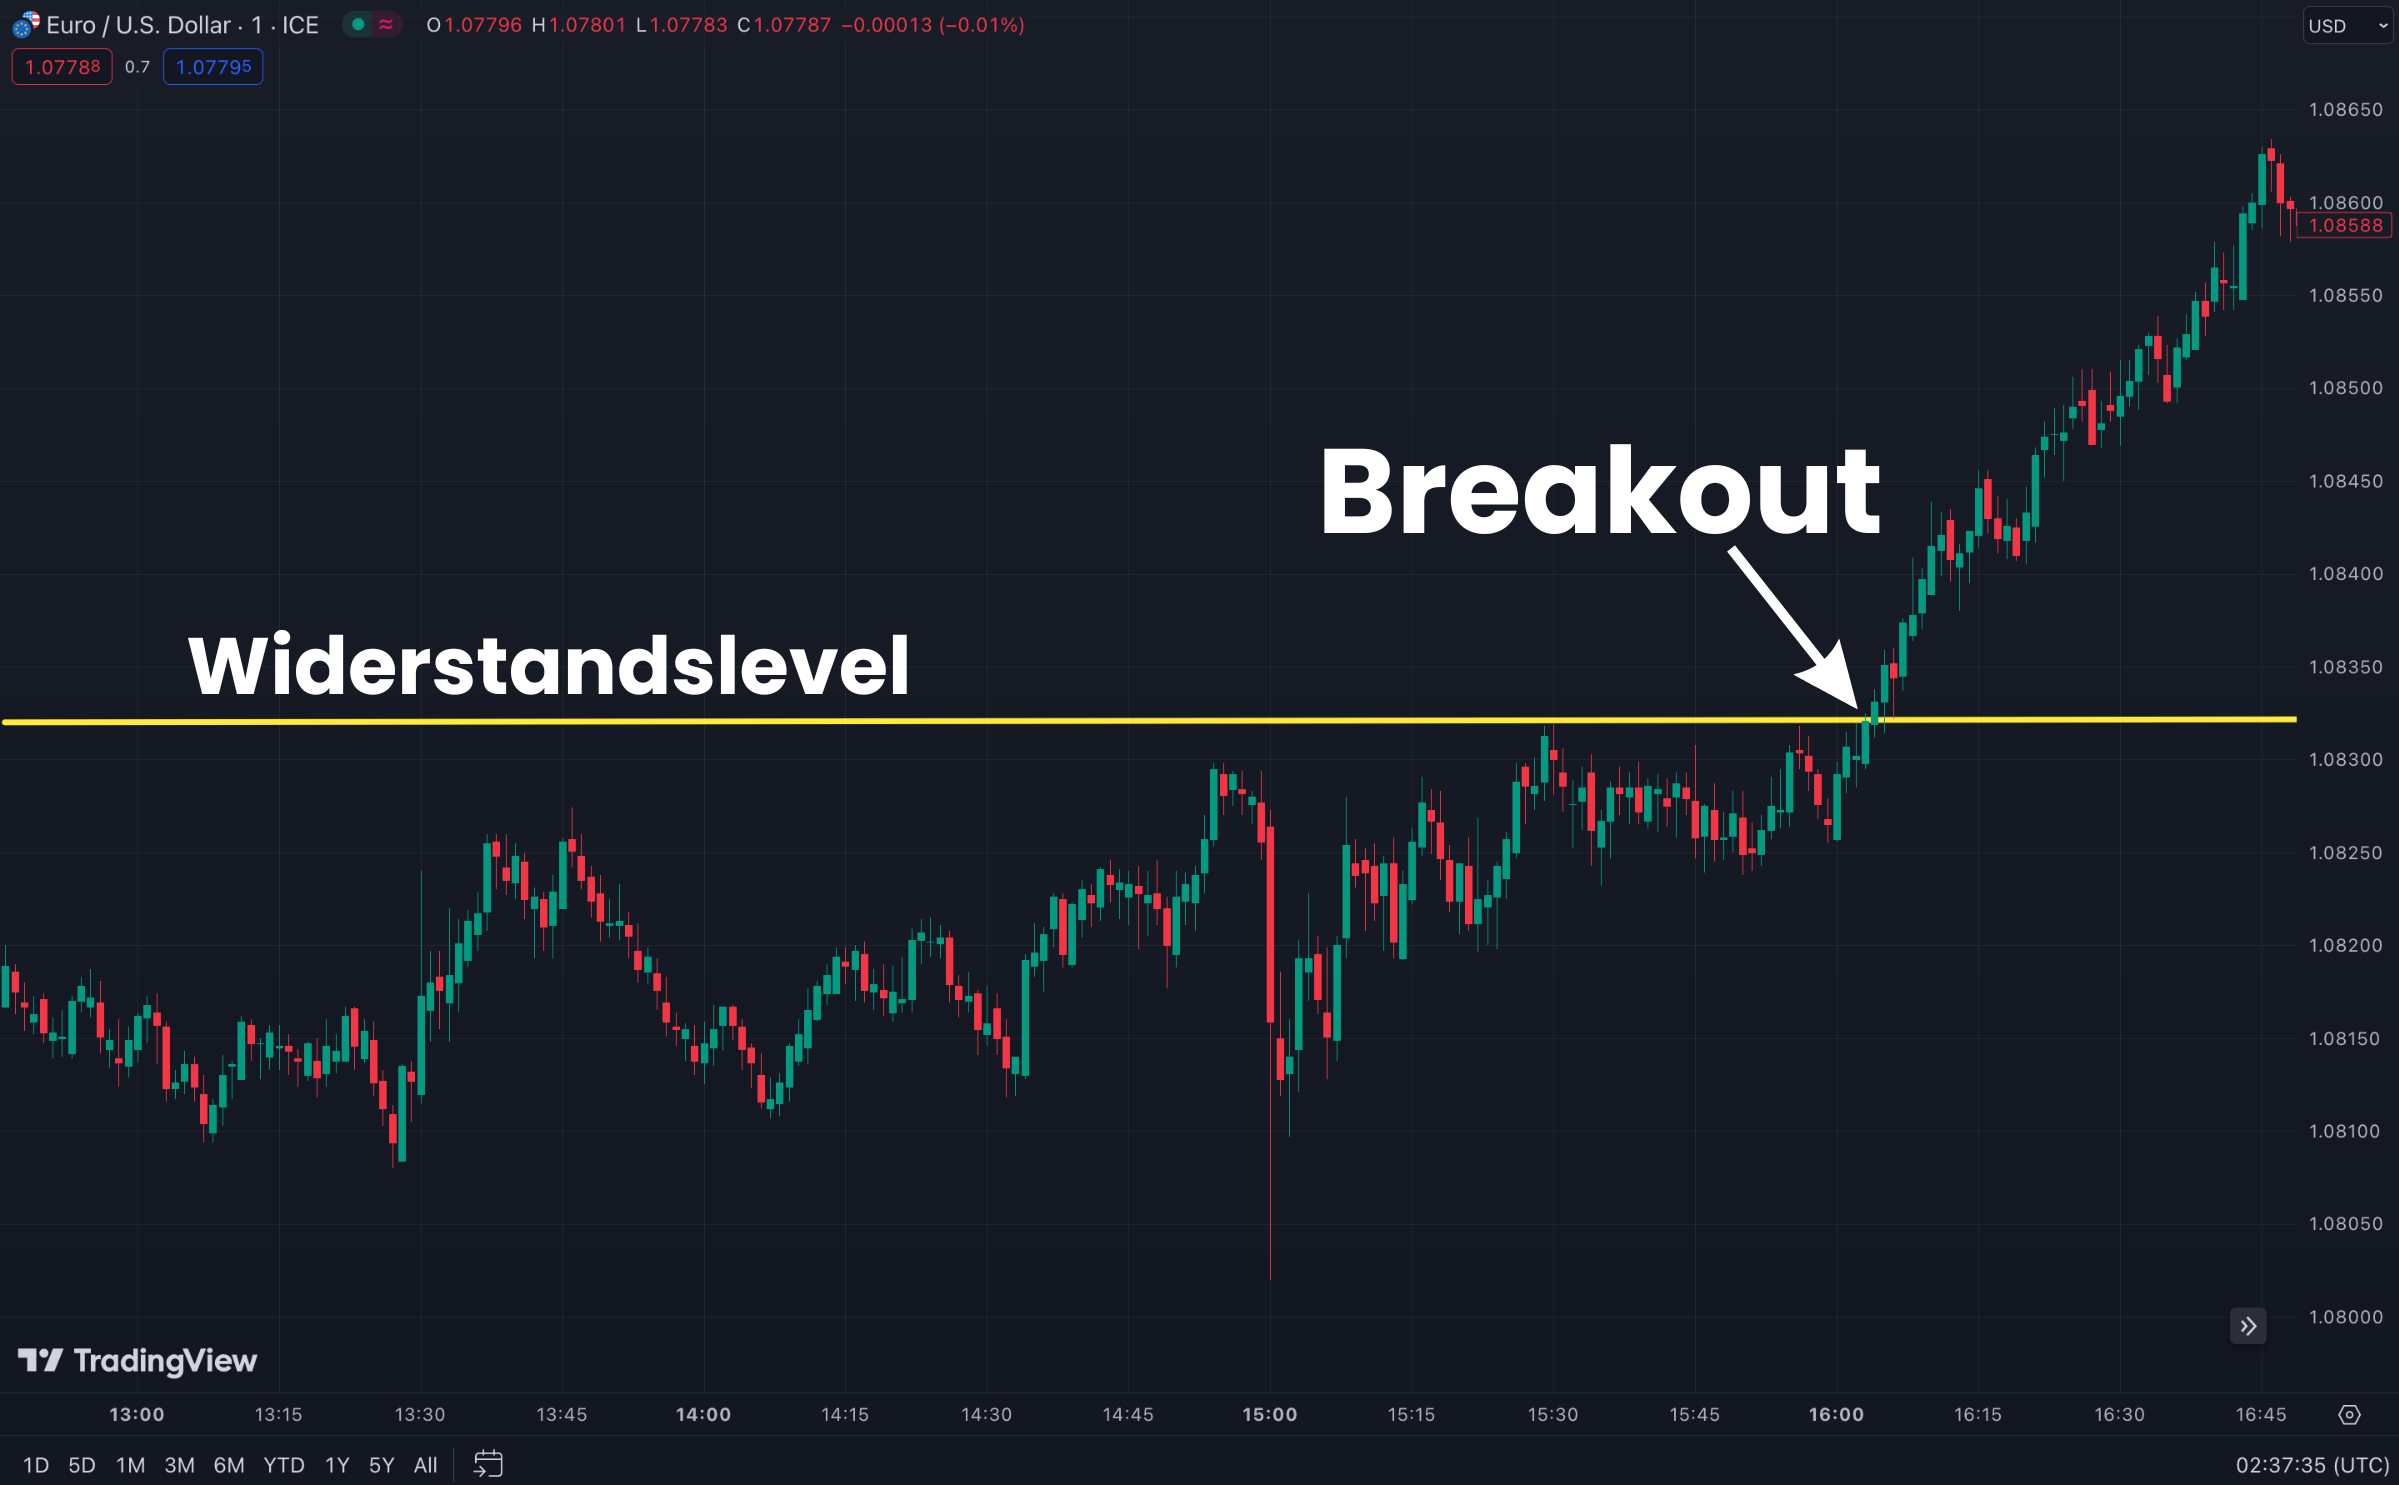 Breakout Strategie im Euro / US Dollar Chart auf TradingView.com.